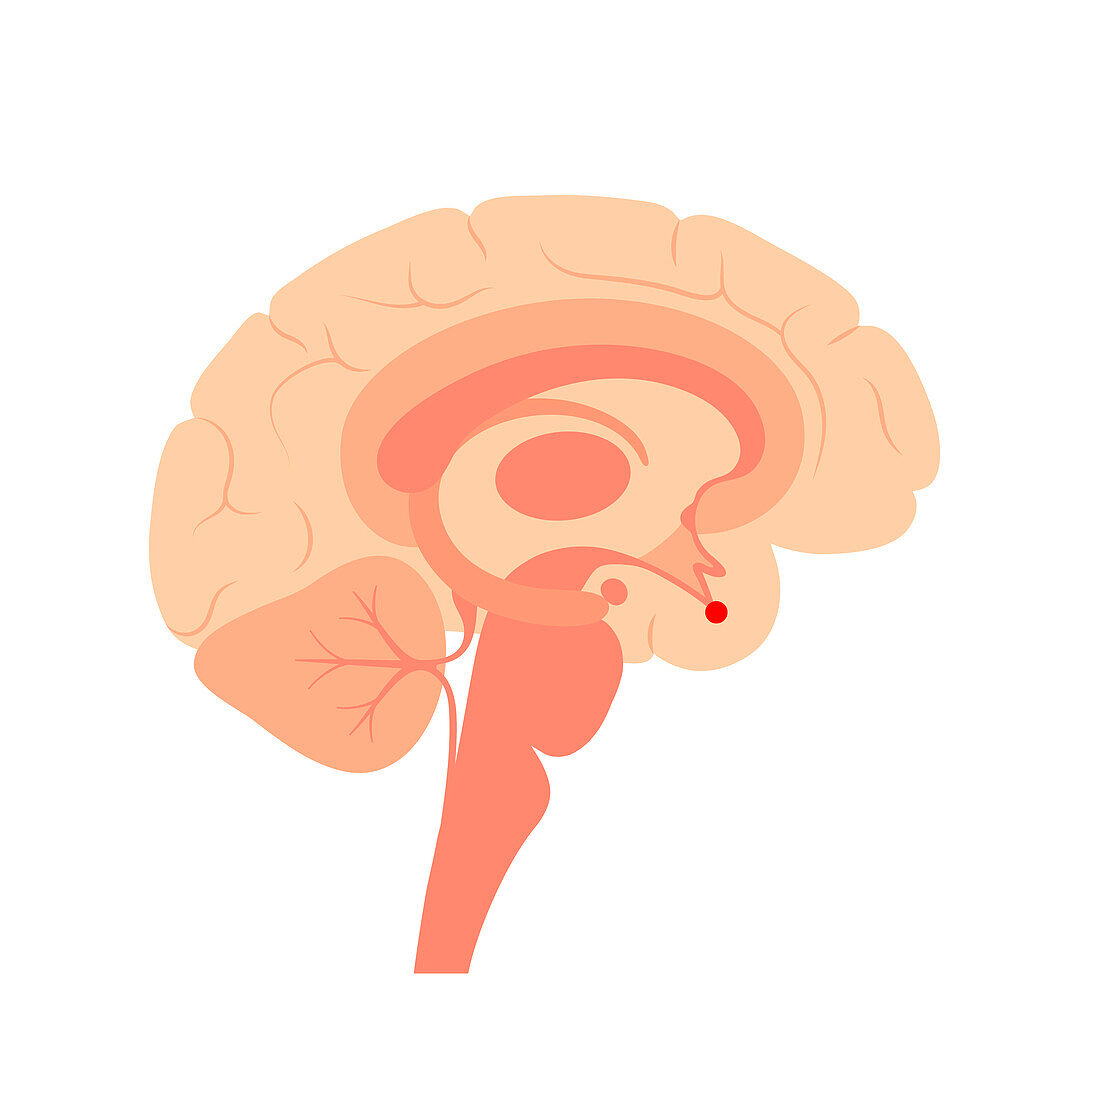 Pituitary gland, illustration